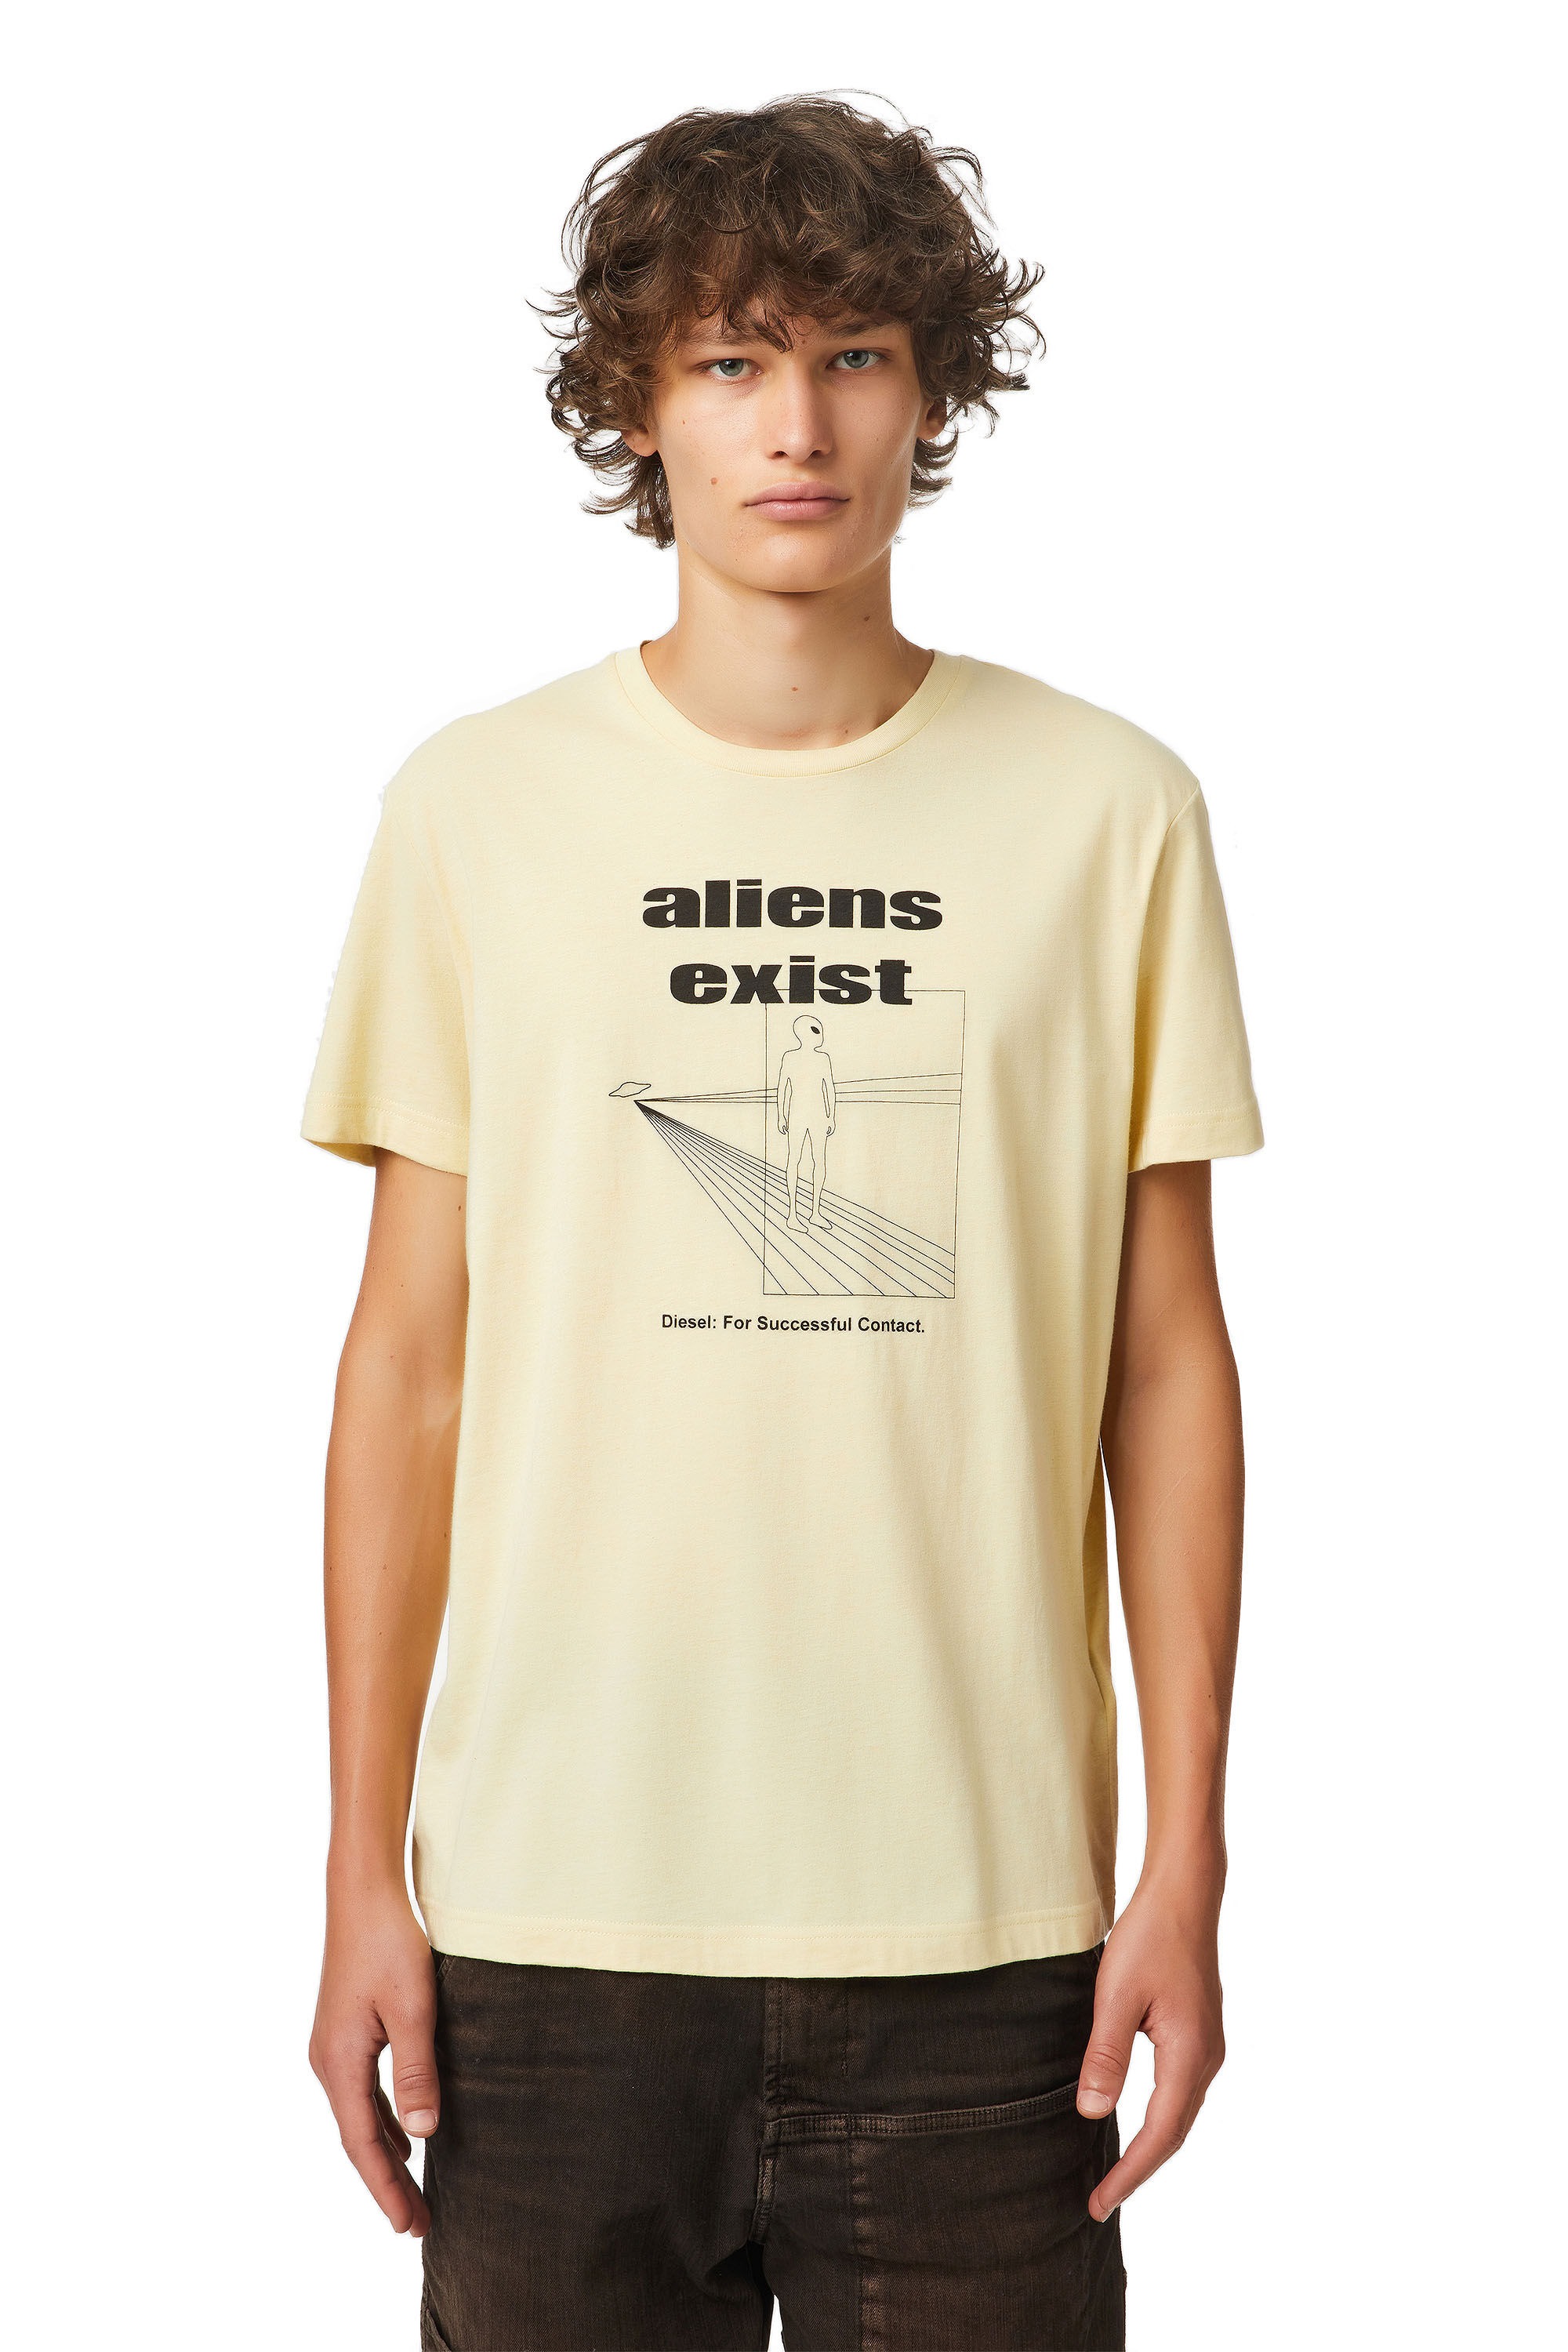 Aliens do Eggsist t-shirt